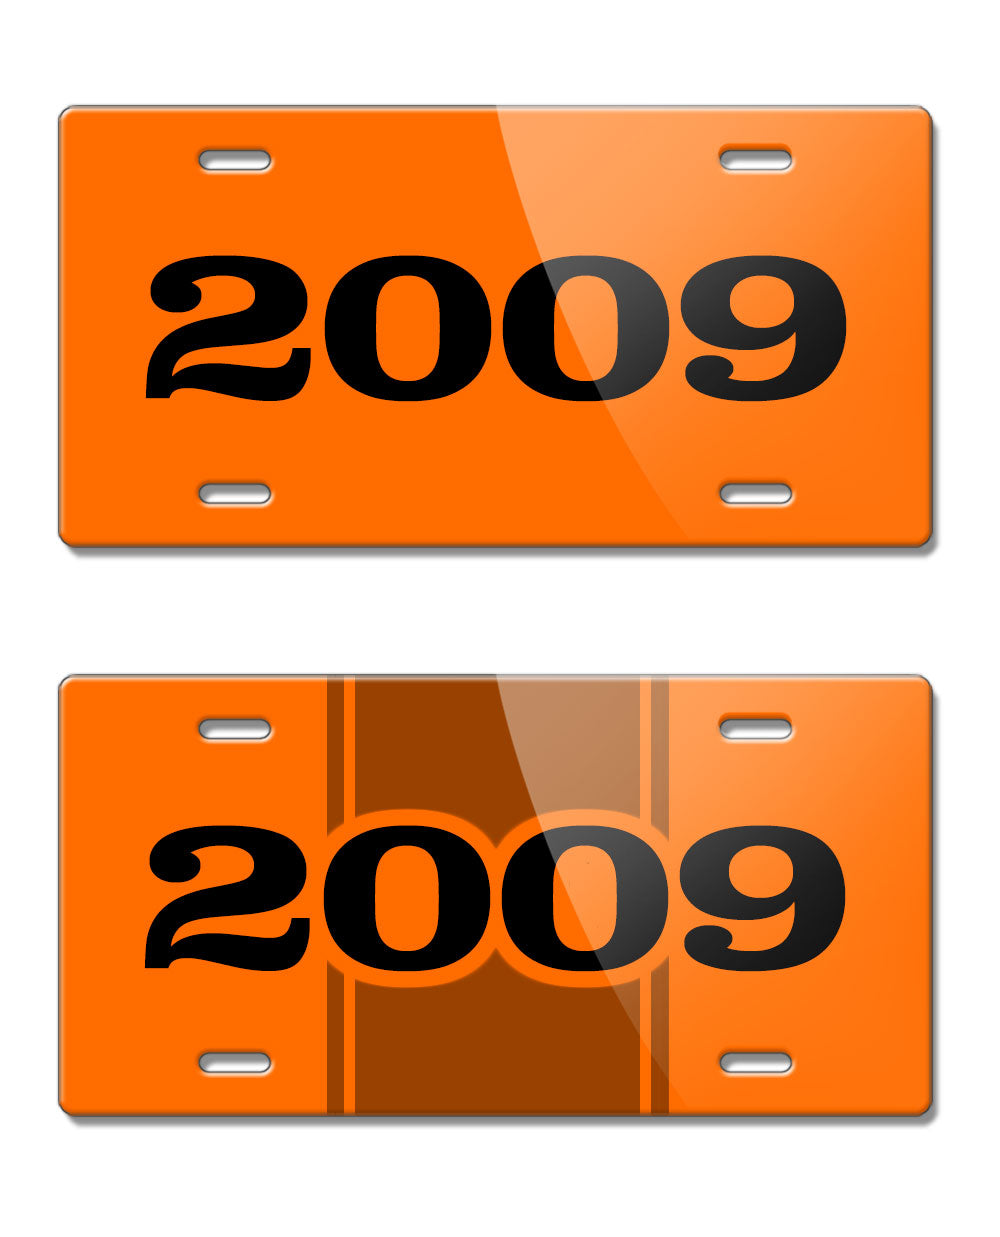 2009 Customizable - License Plate